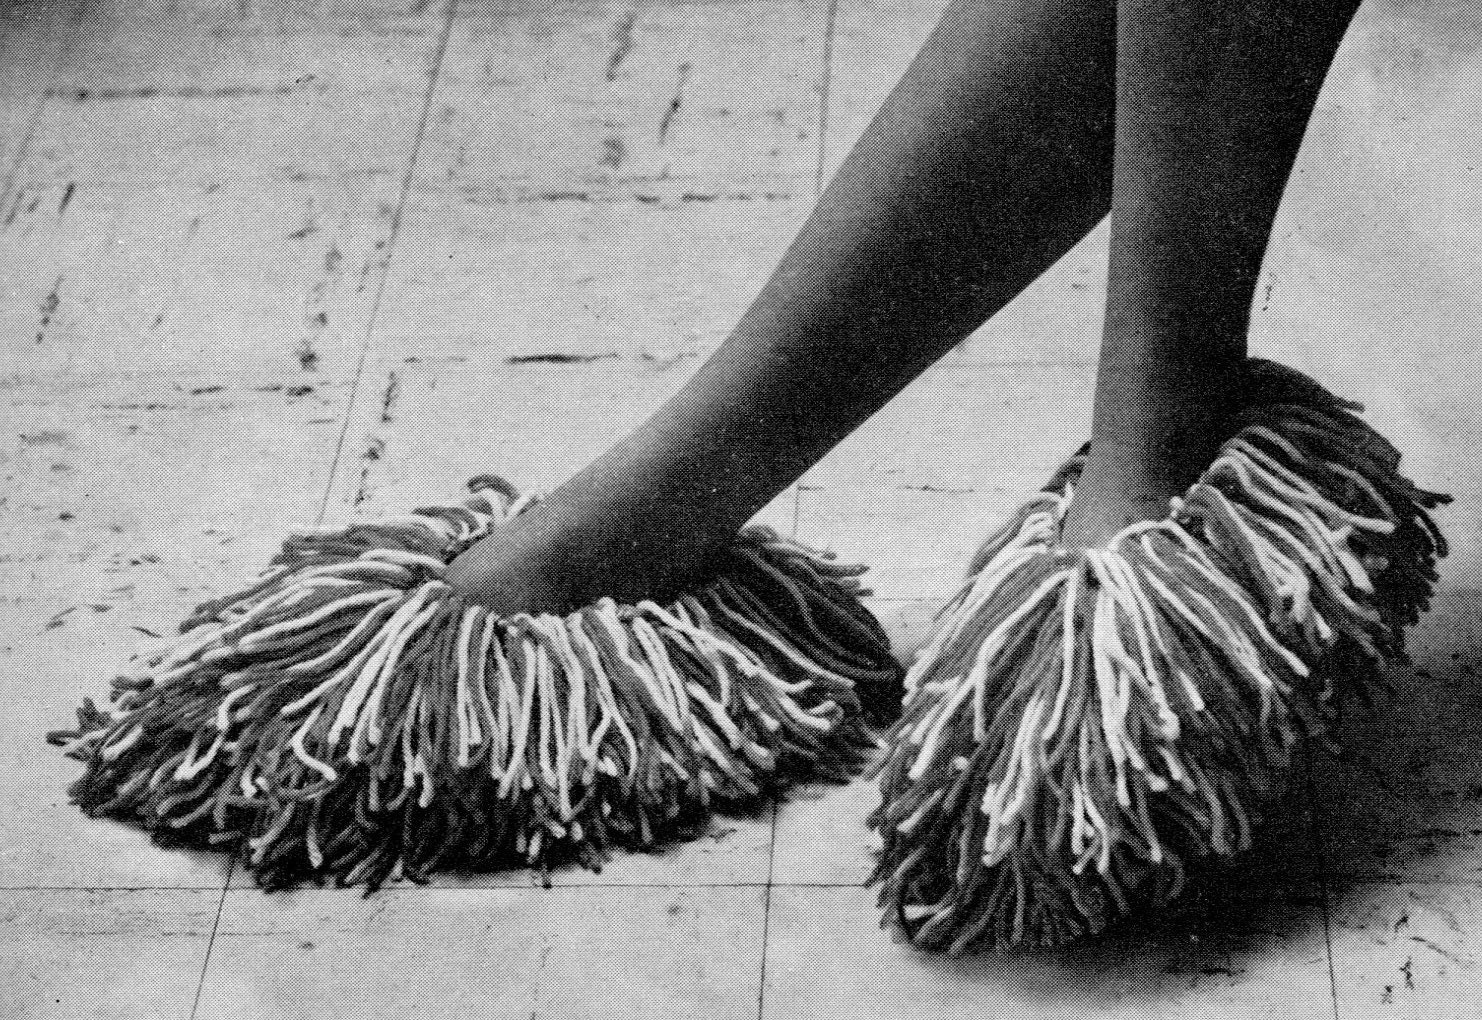 Spot Dog Microfiber Mop Slippers Women Floor Dust Dirt Cleaning Slipper  Cartoon House Office Home Room Gift Holiday